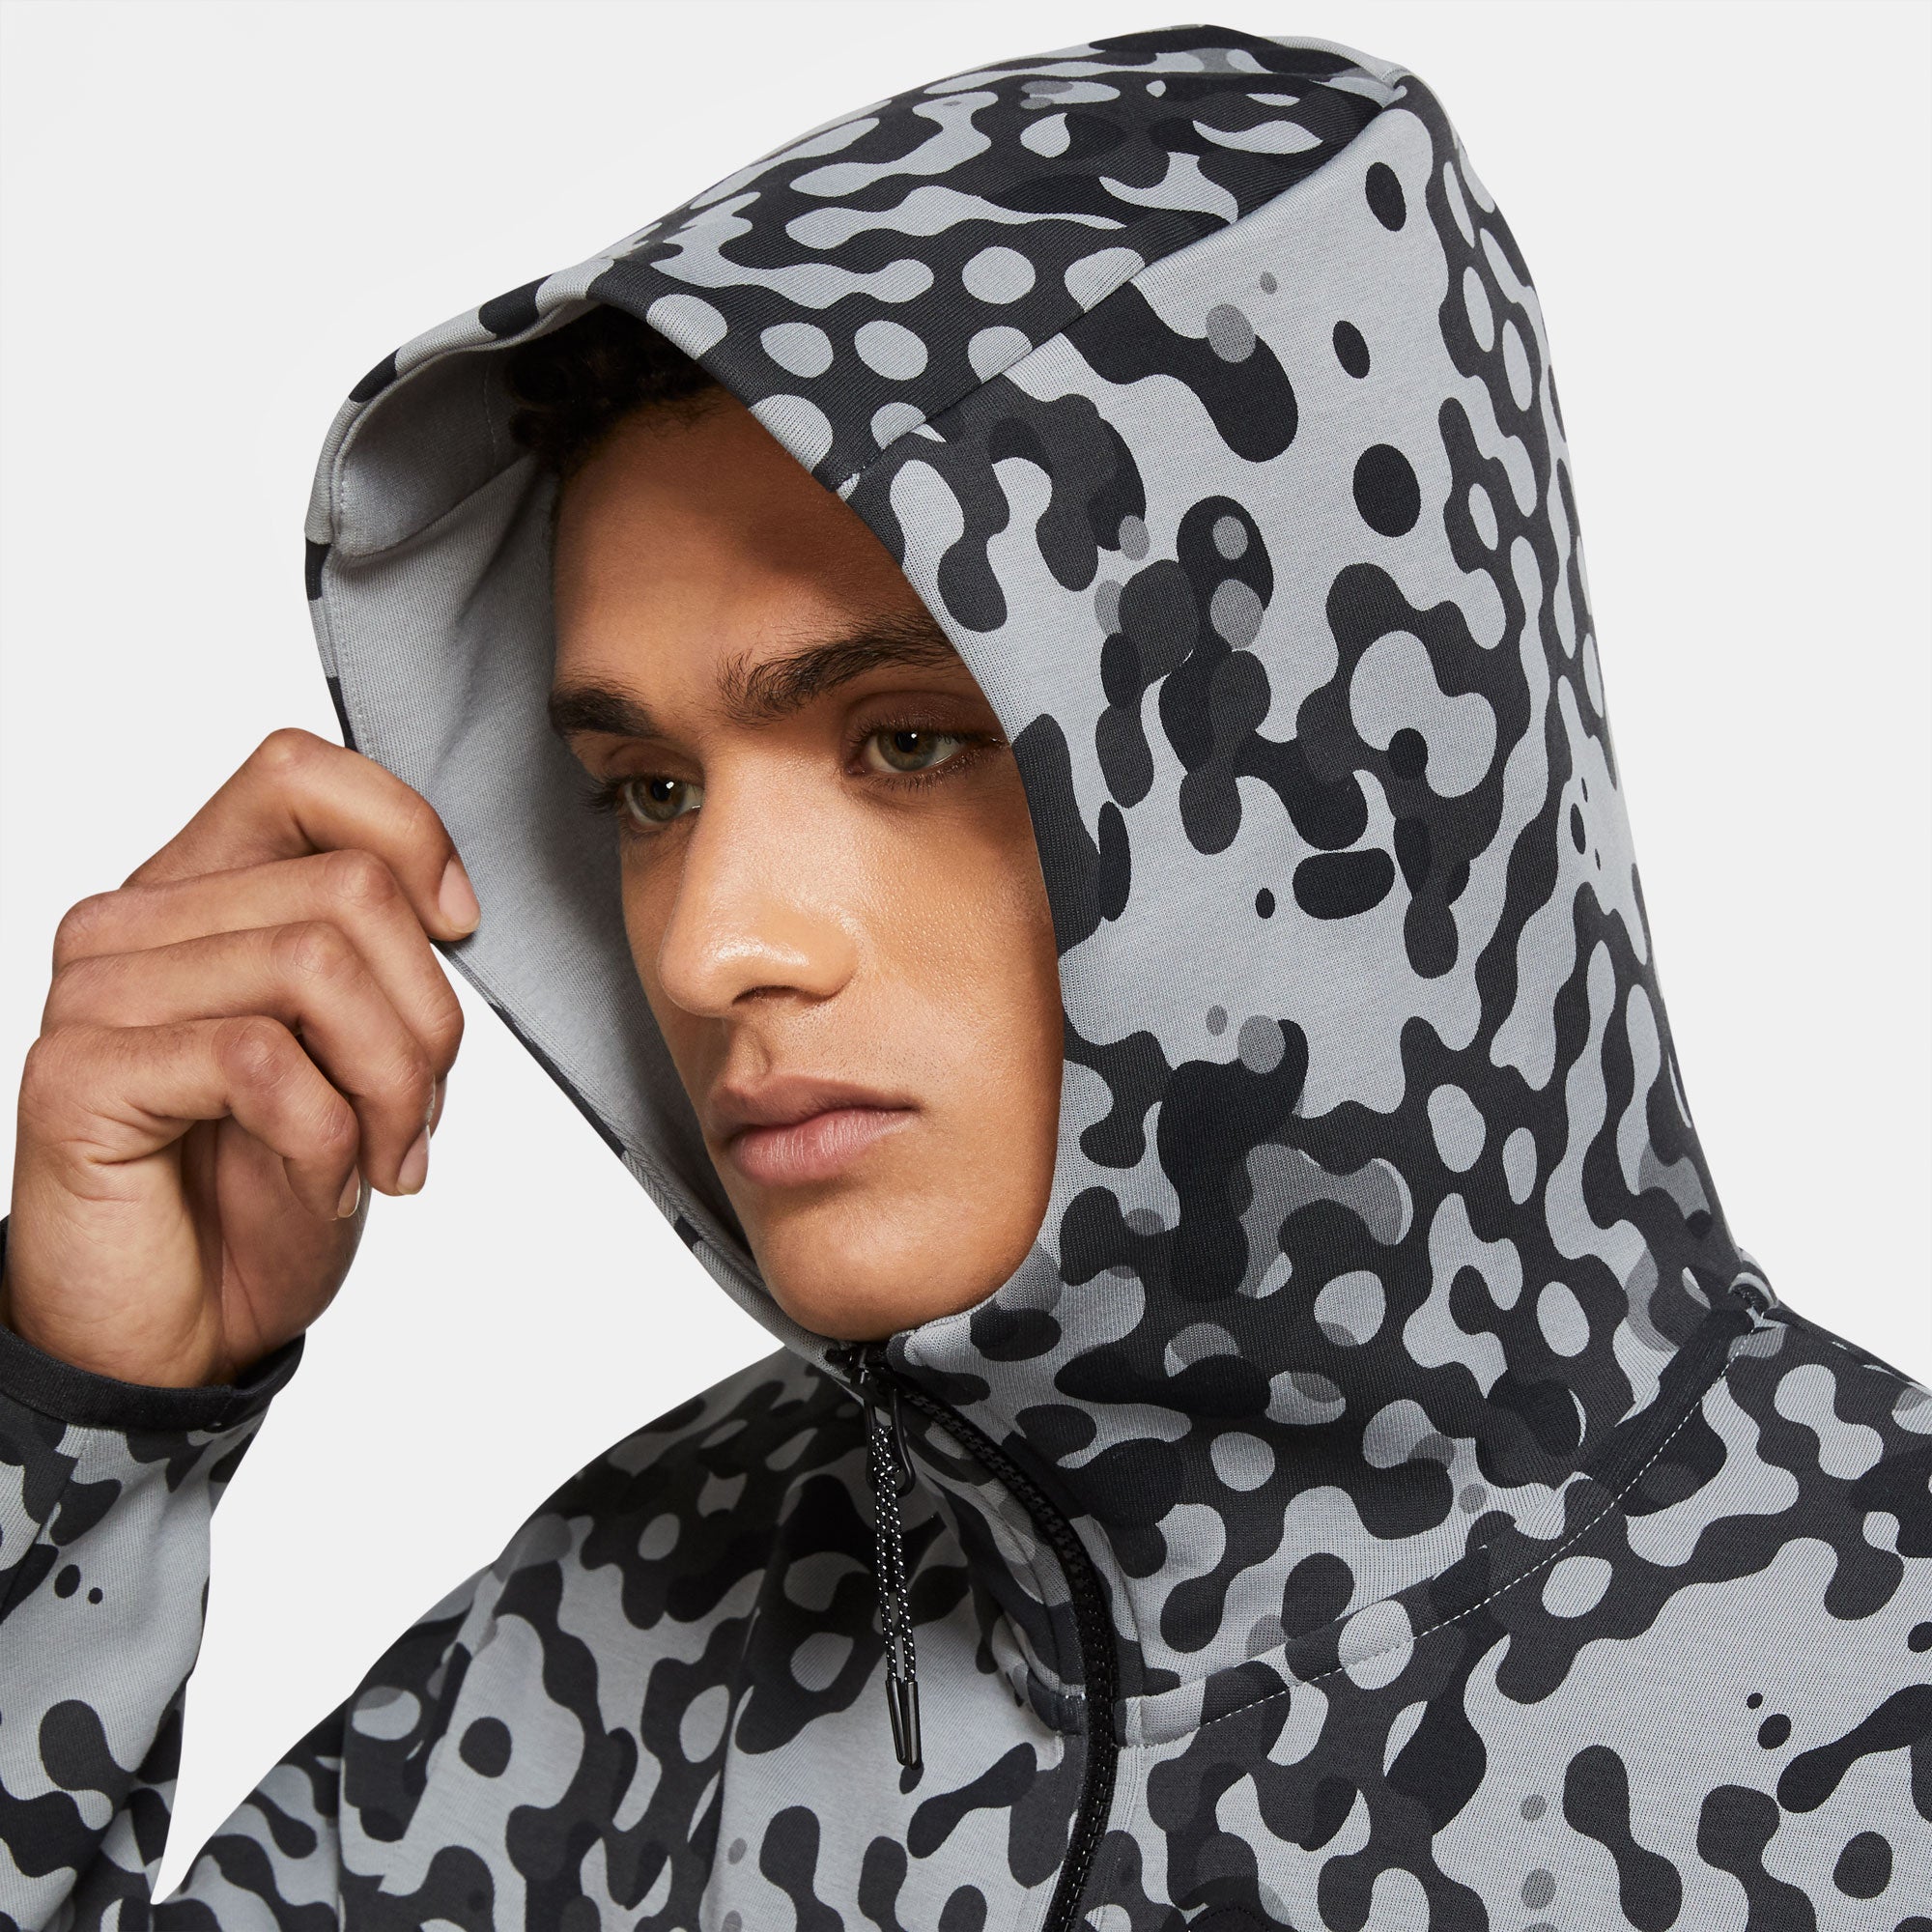 Shop Nike Tech Fleece Full-Zip Hoodie FB7921-063 grey